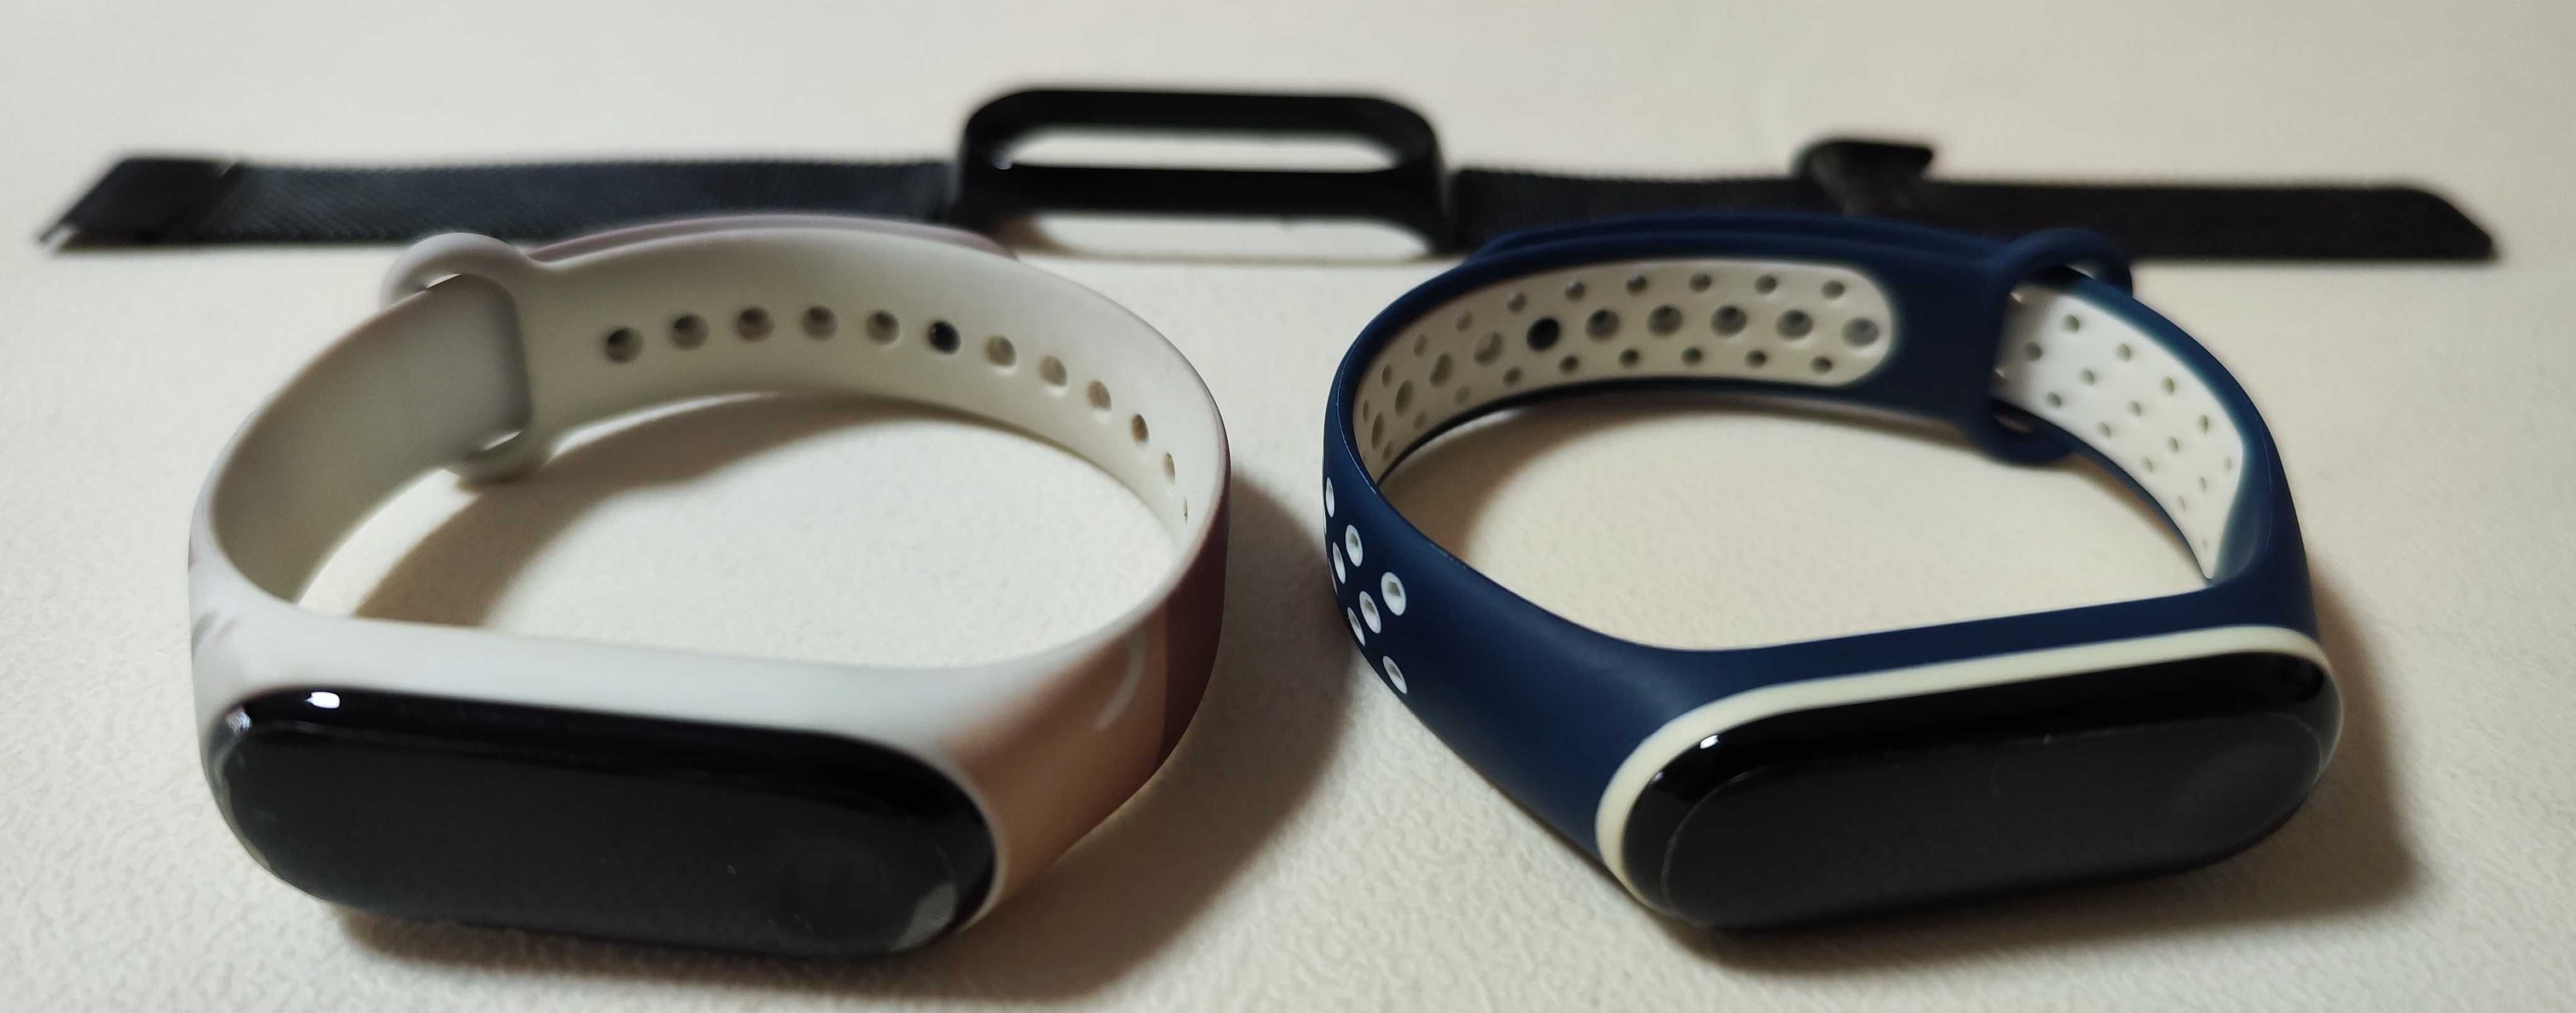 Xiaomi Mi Band 3 - duas pulseiras + bracelete